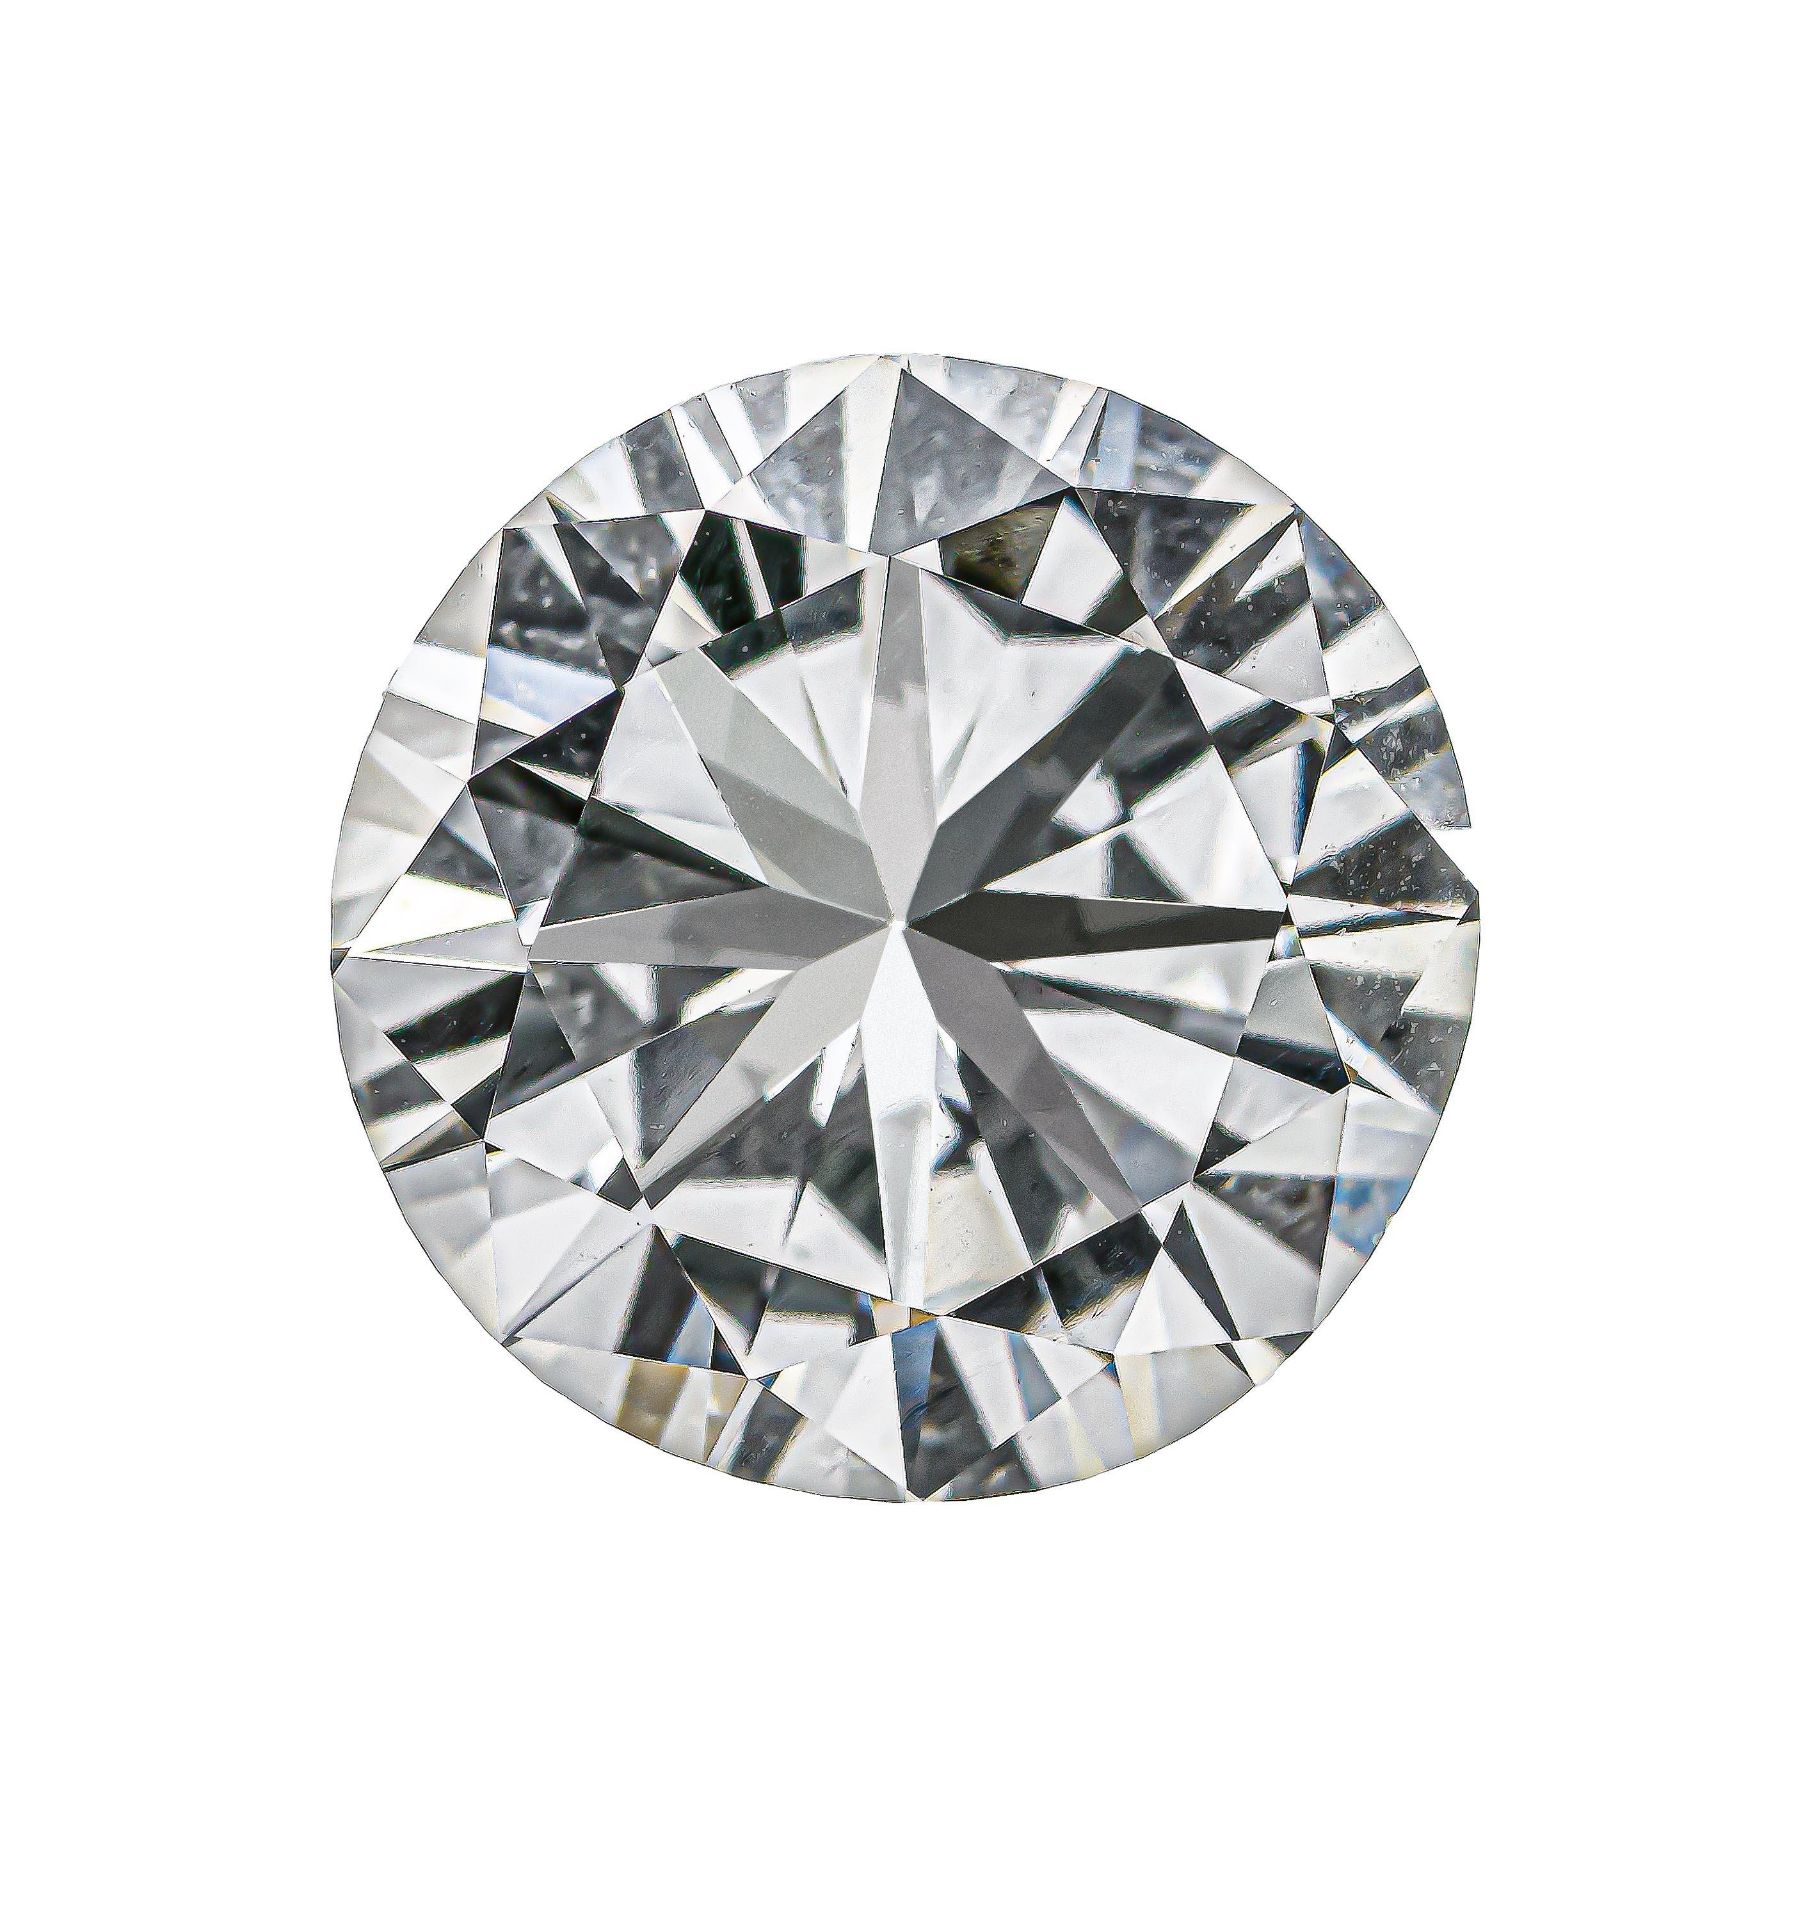 Unmounted Brilliant-cut diamond - Image 4 of 4